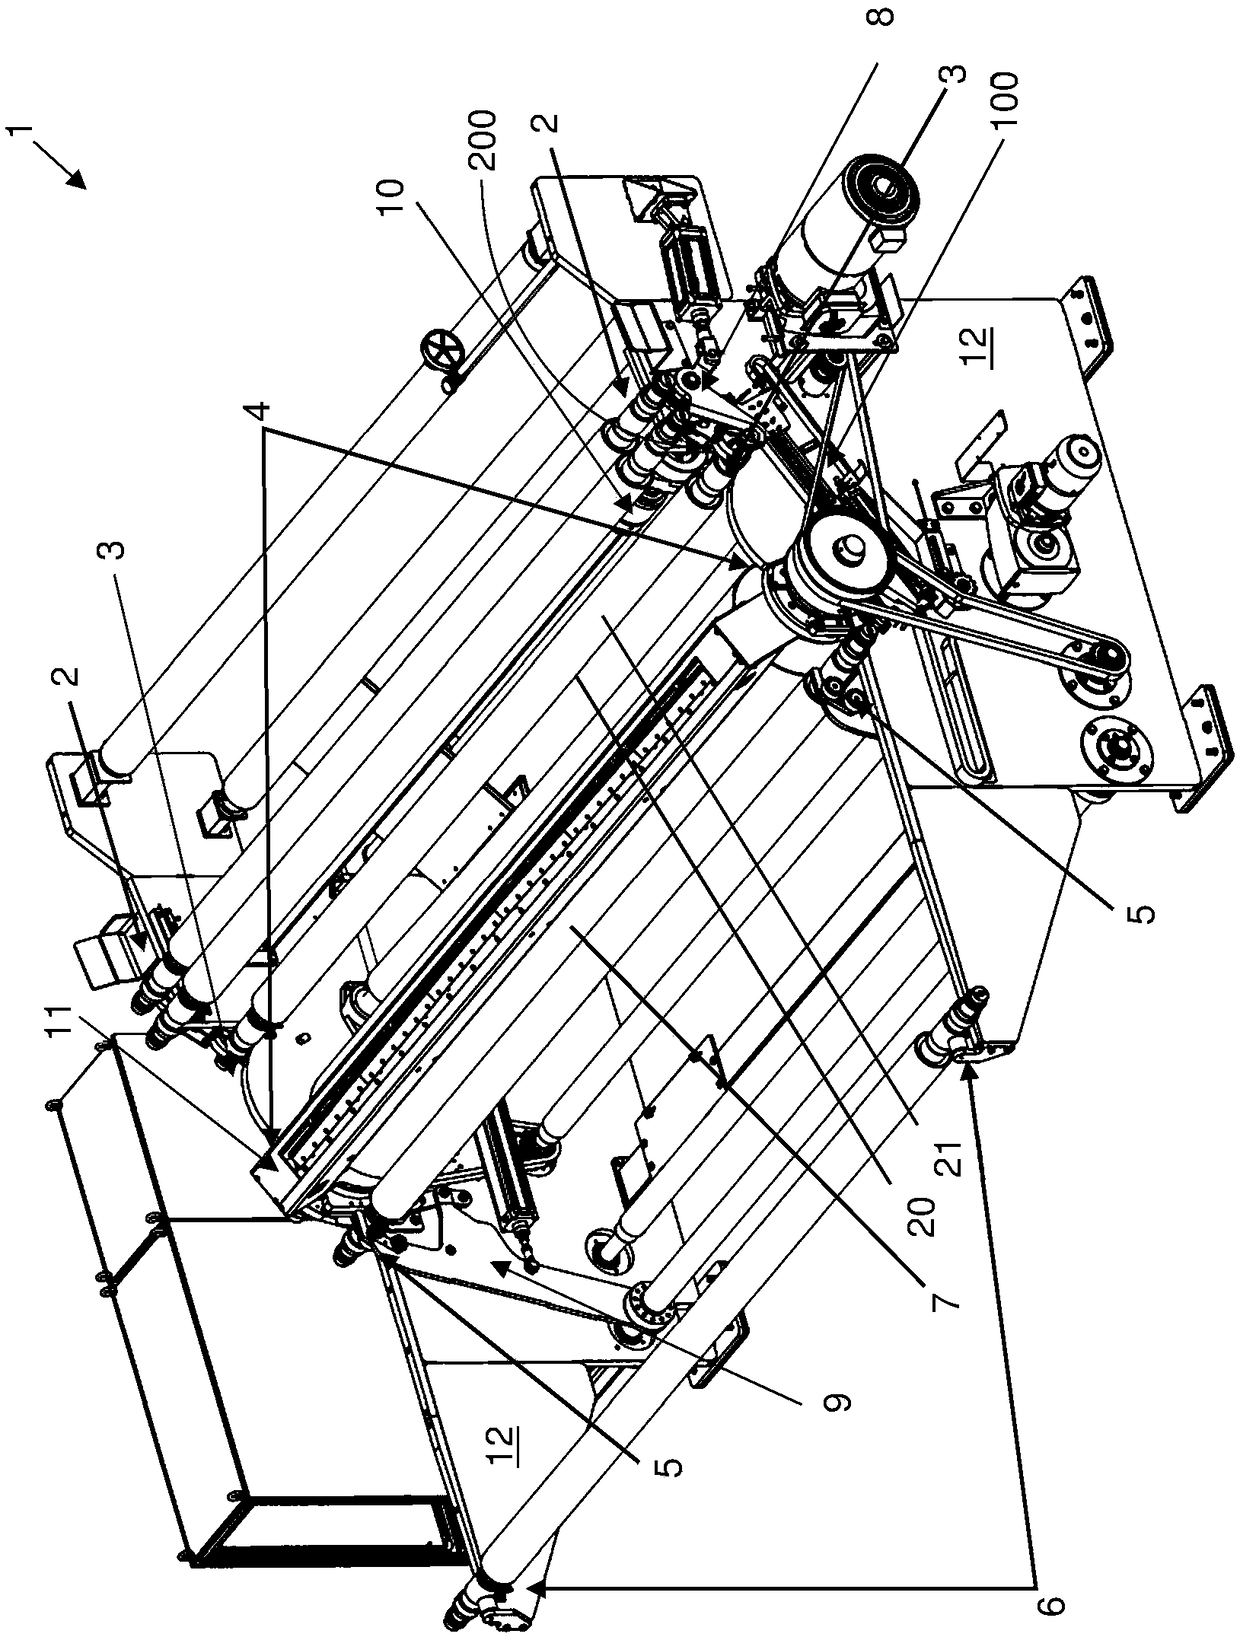 Locking mechanism of fabric coiler